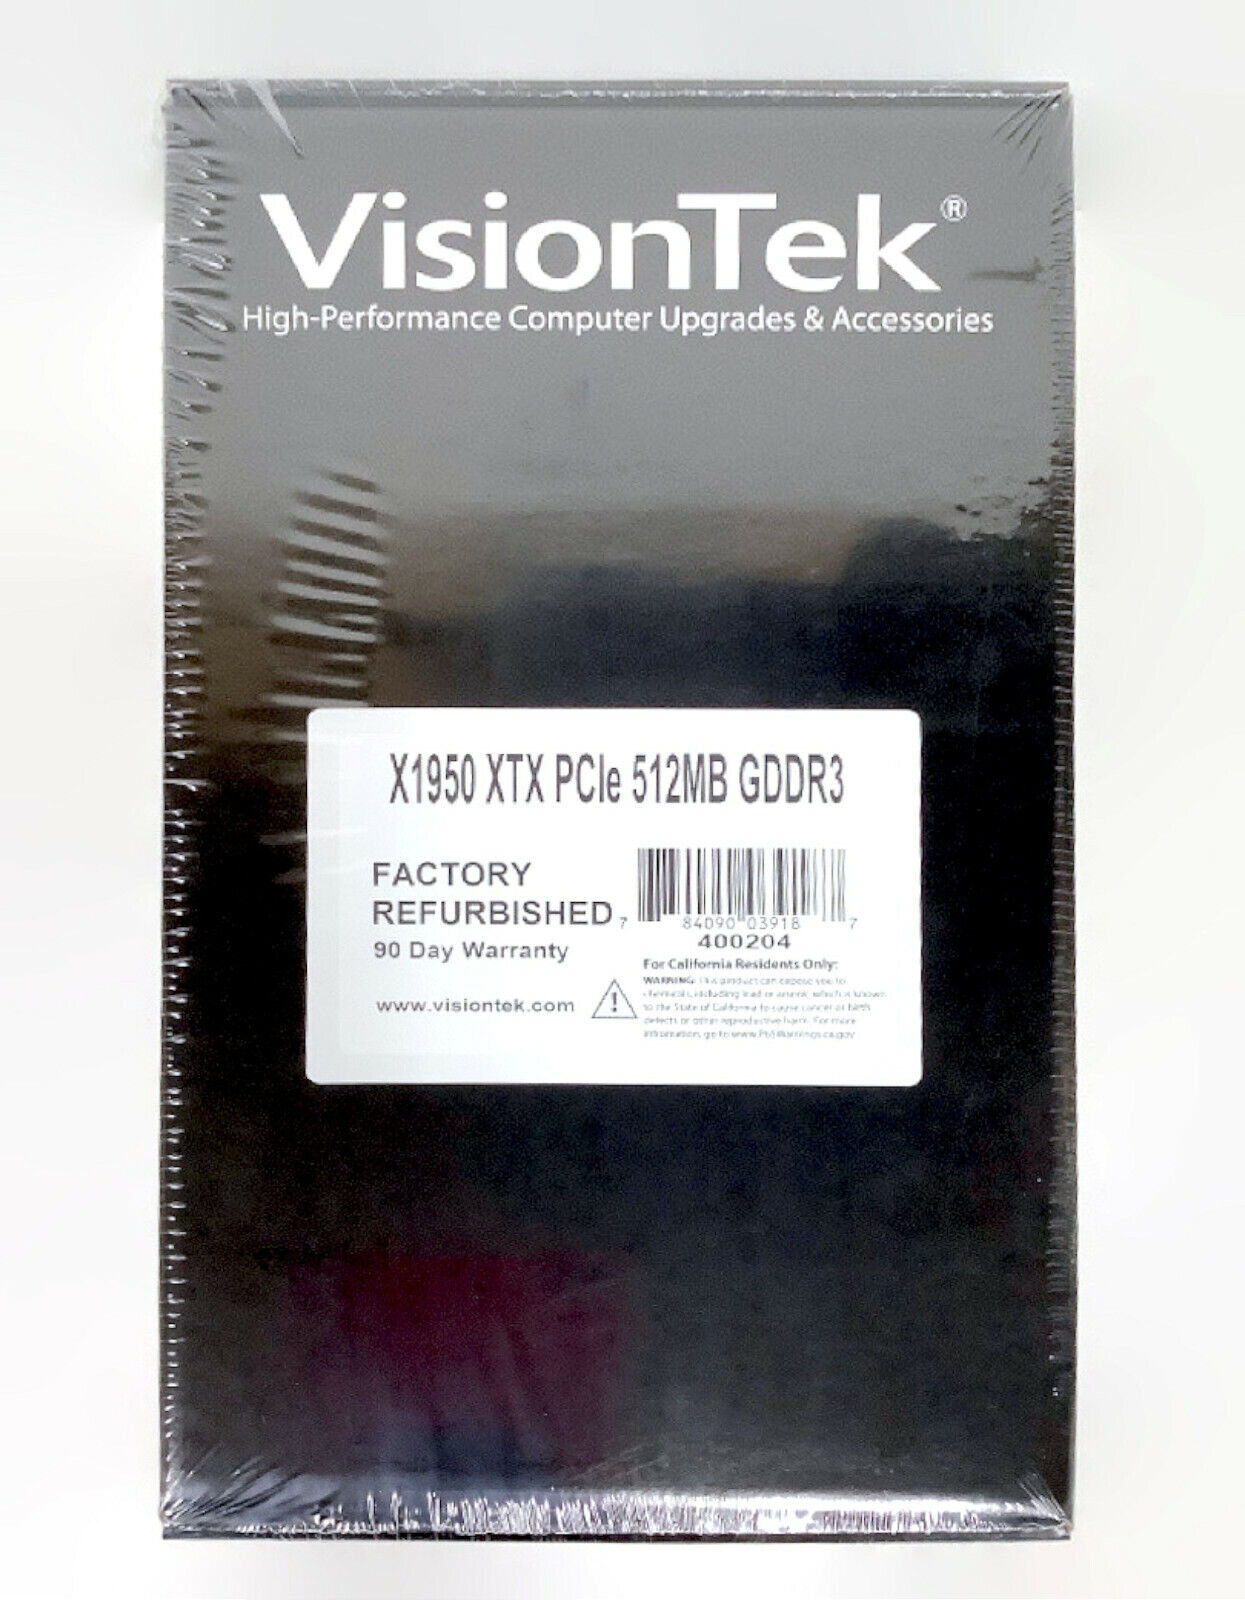 VisionTek 400204 ATI Radeon X1950 XTX PCIe 512MB GDDR3 VGA Video Graphics Card